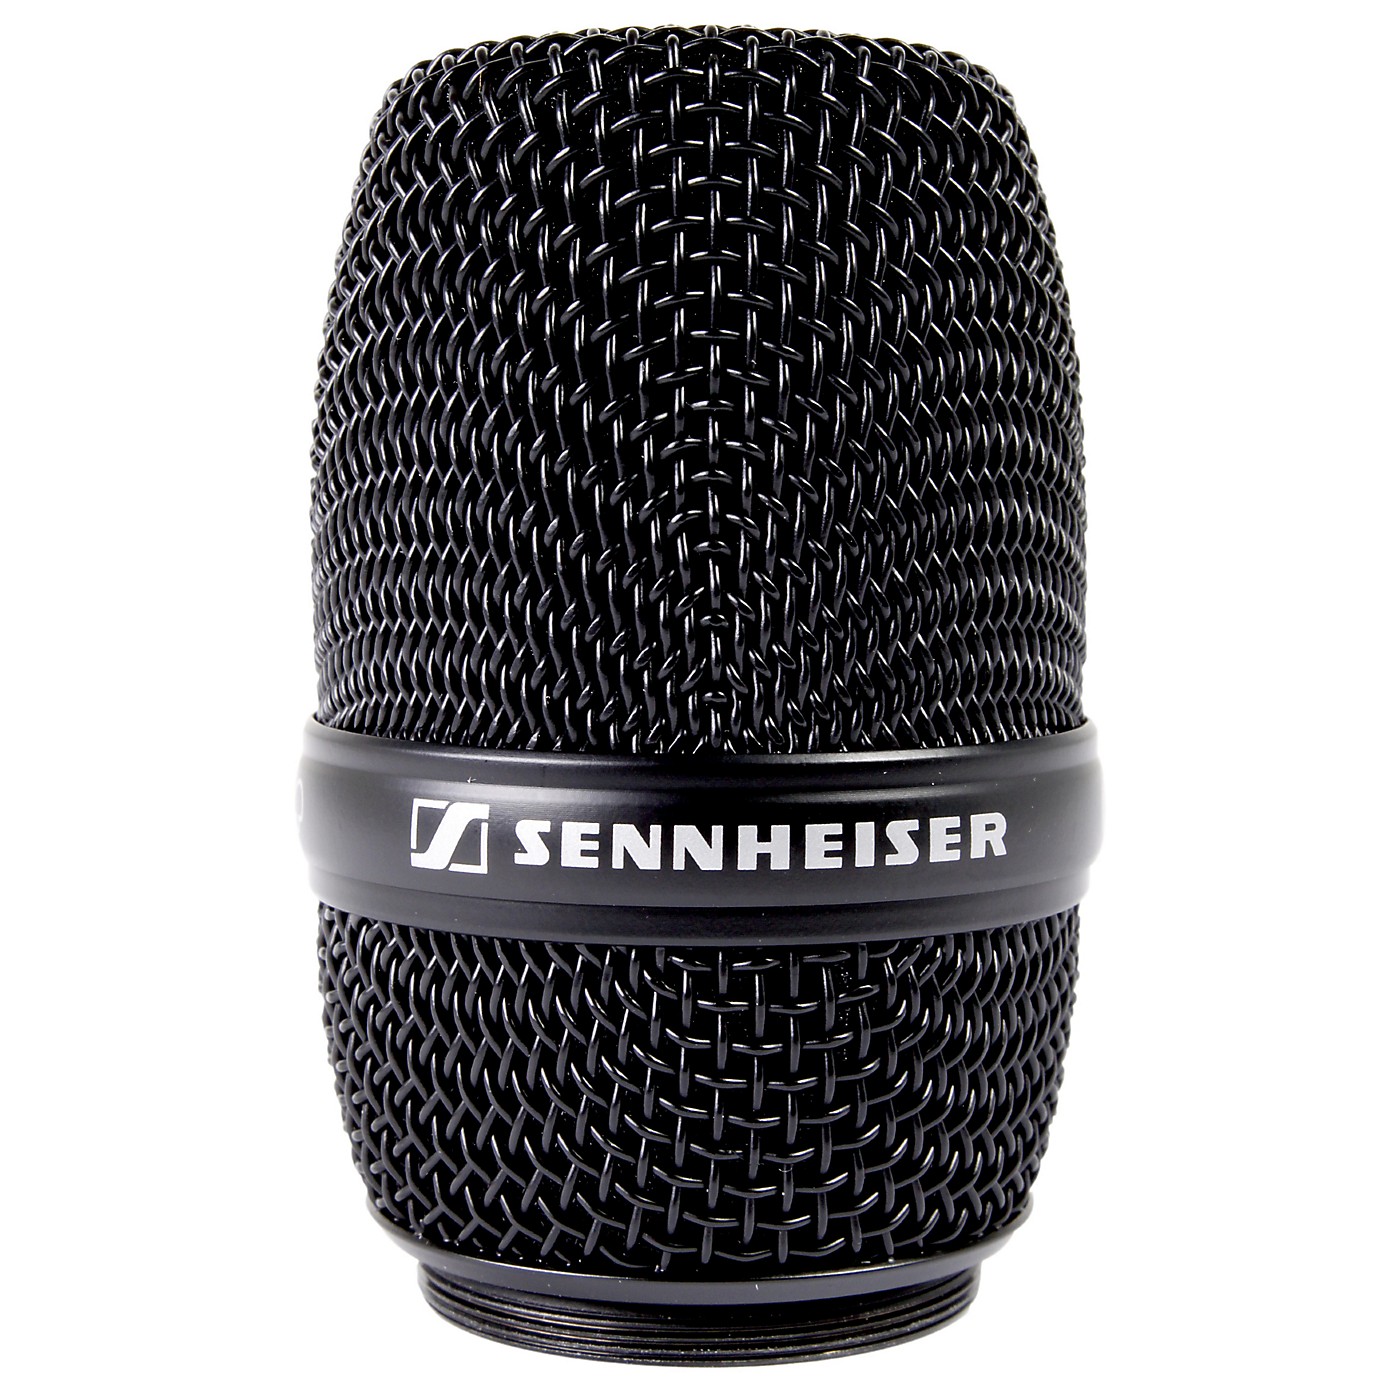 Sennheiser MMD 945-1 e945 Wireless Mic Capsule thumbnail